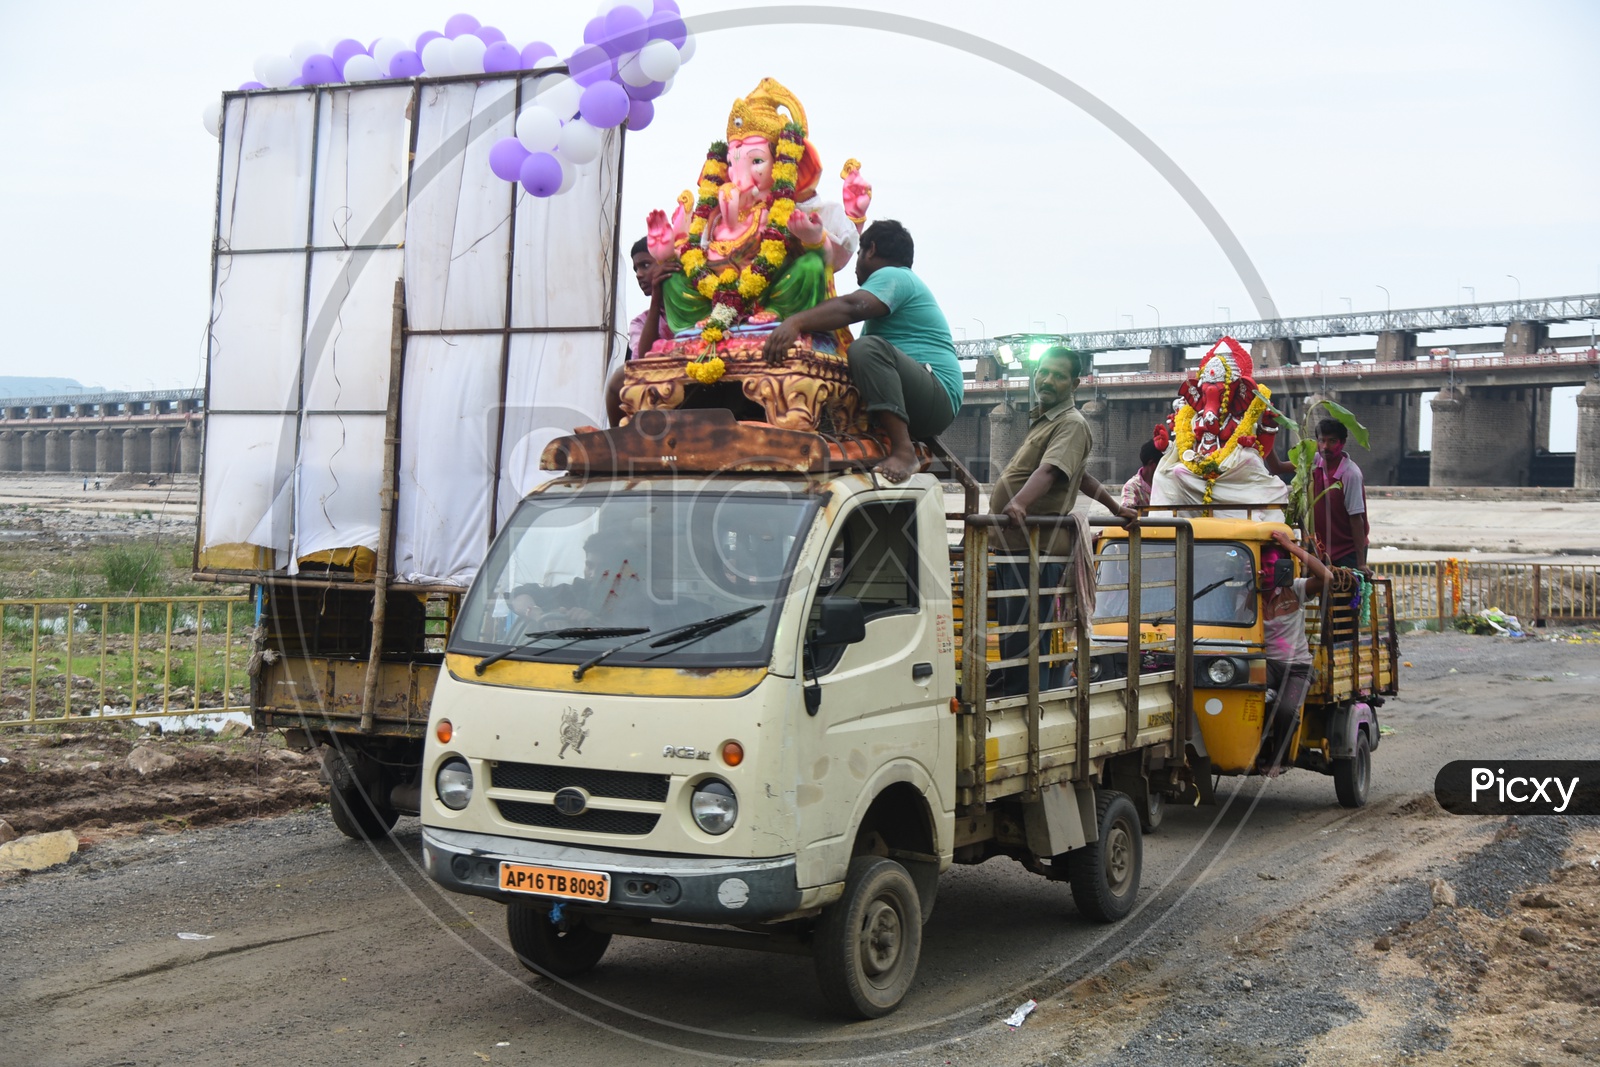 Ganesha Idols on the trolley autos during Ganesh Visarjan